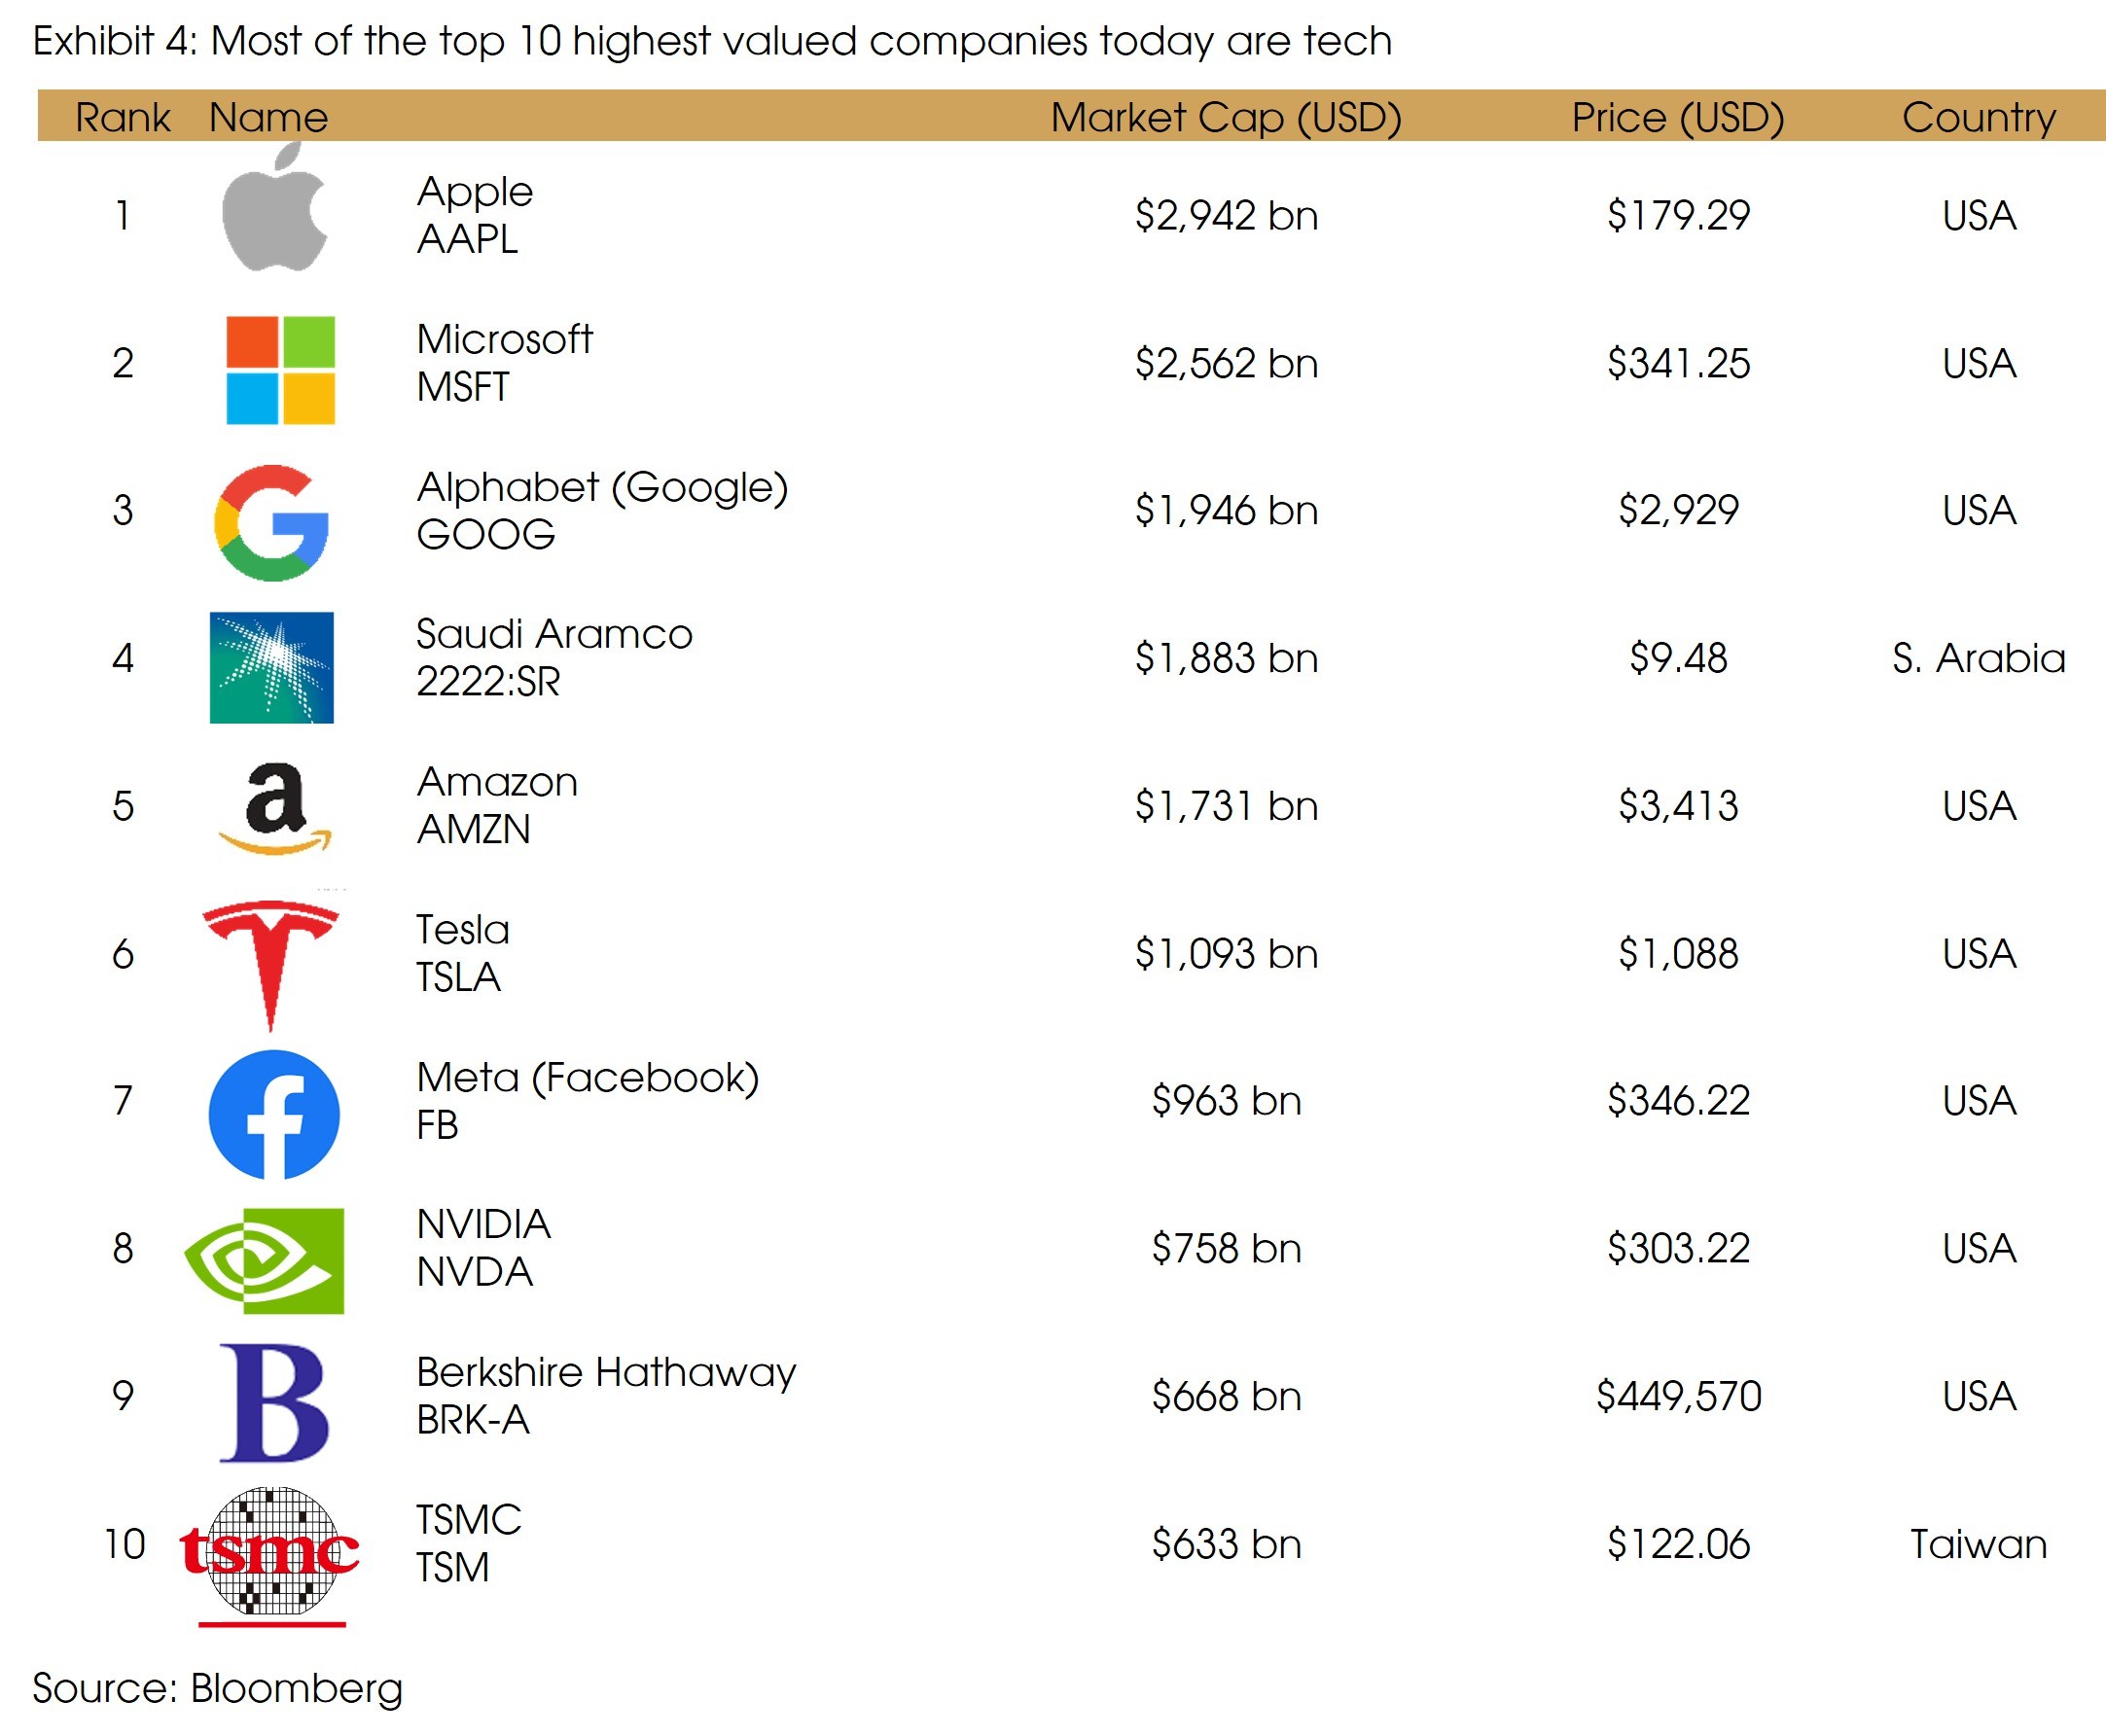 Exhibit 4 Top 10 Highest Valued Companies